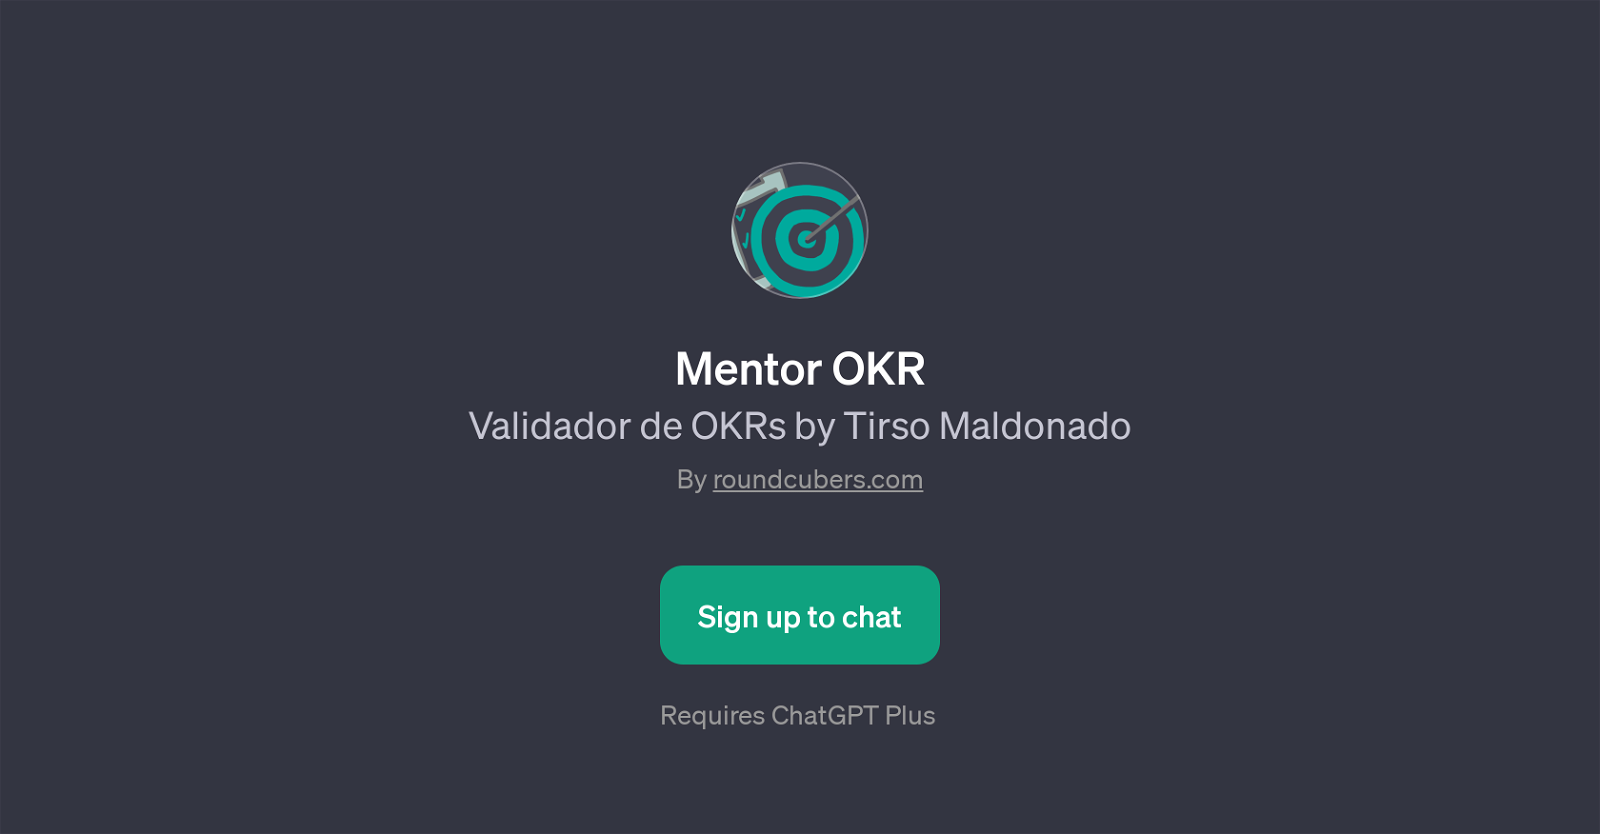 Mentor OKR website